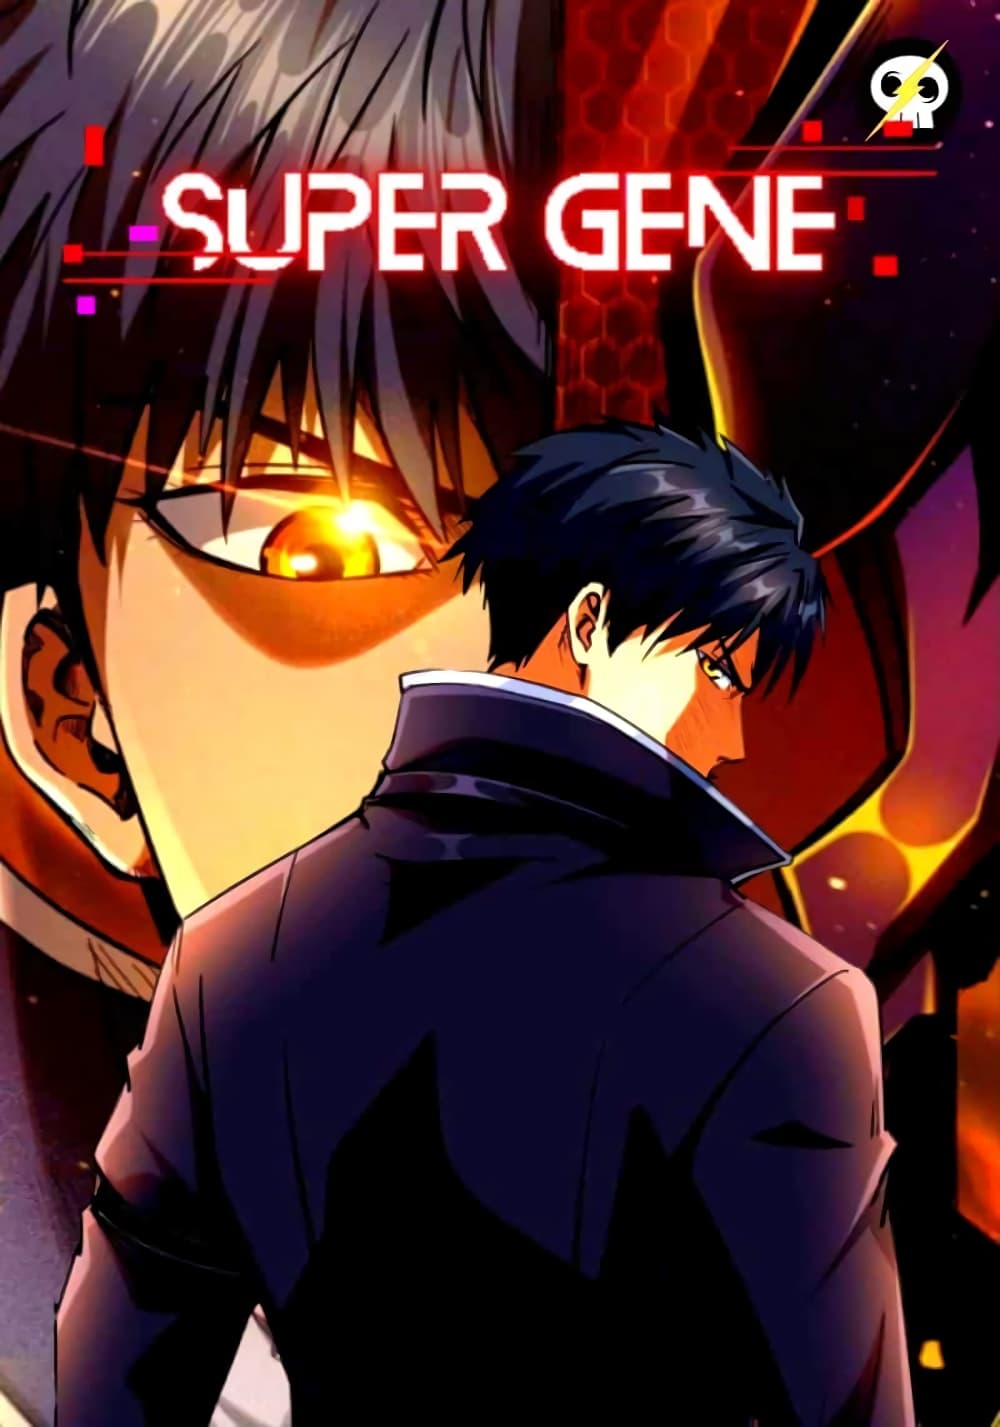 Super God Gene 4-4